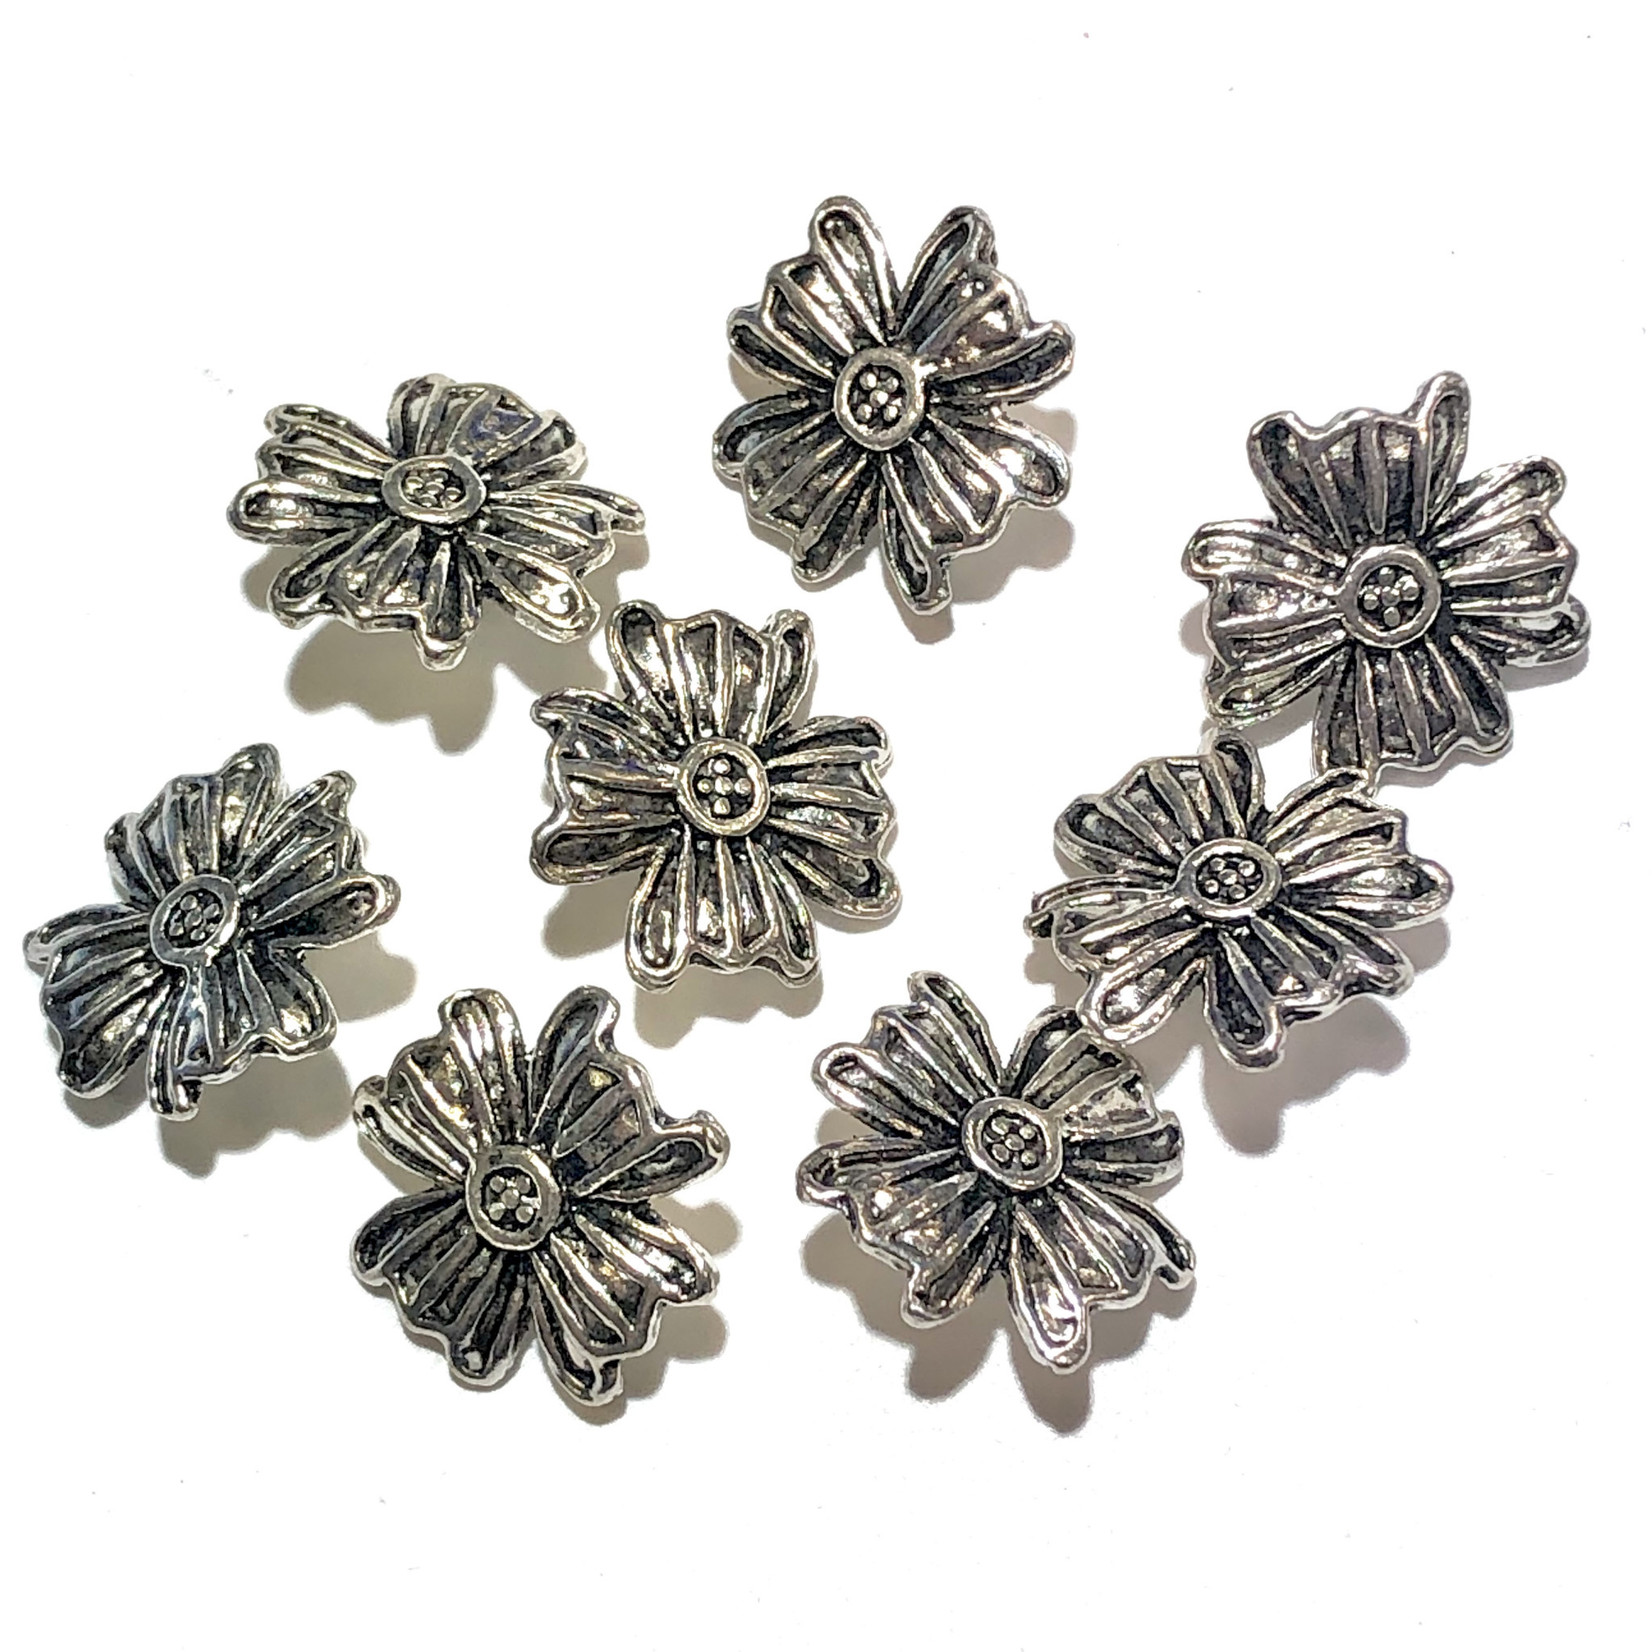 Tibetan Silver Alloy 14mm Small Flower Button 12pcs